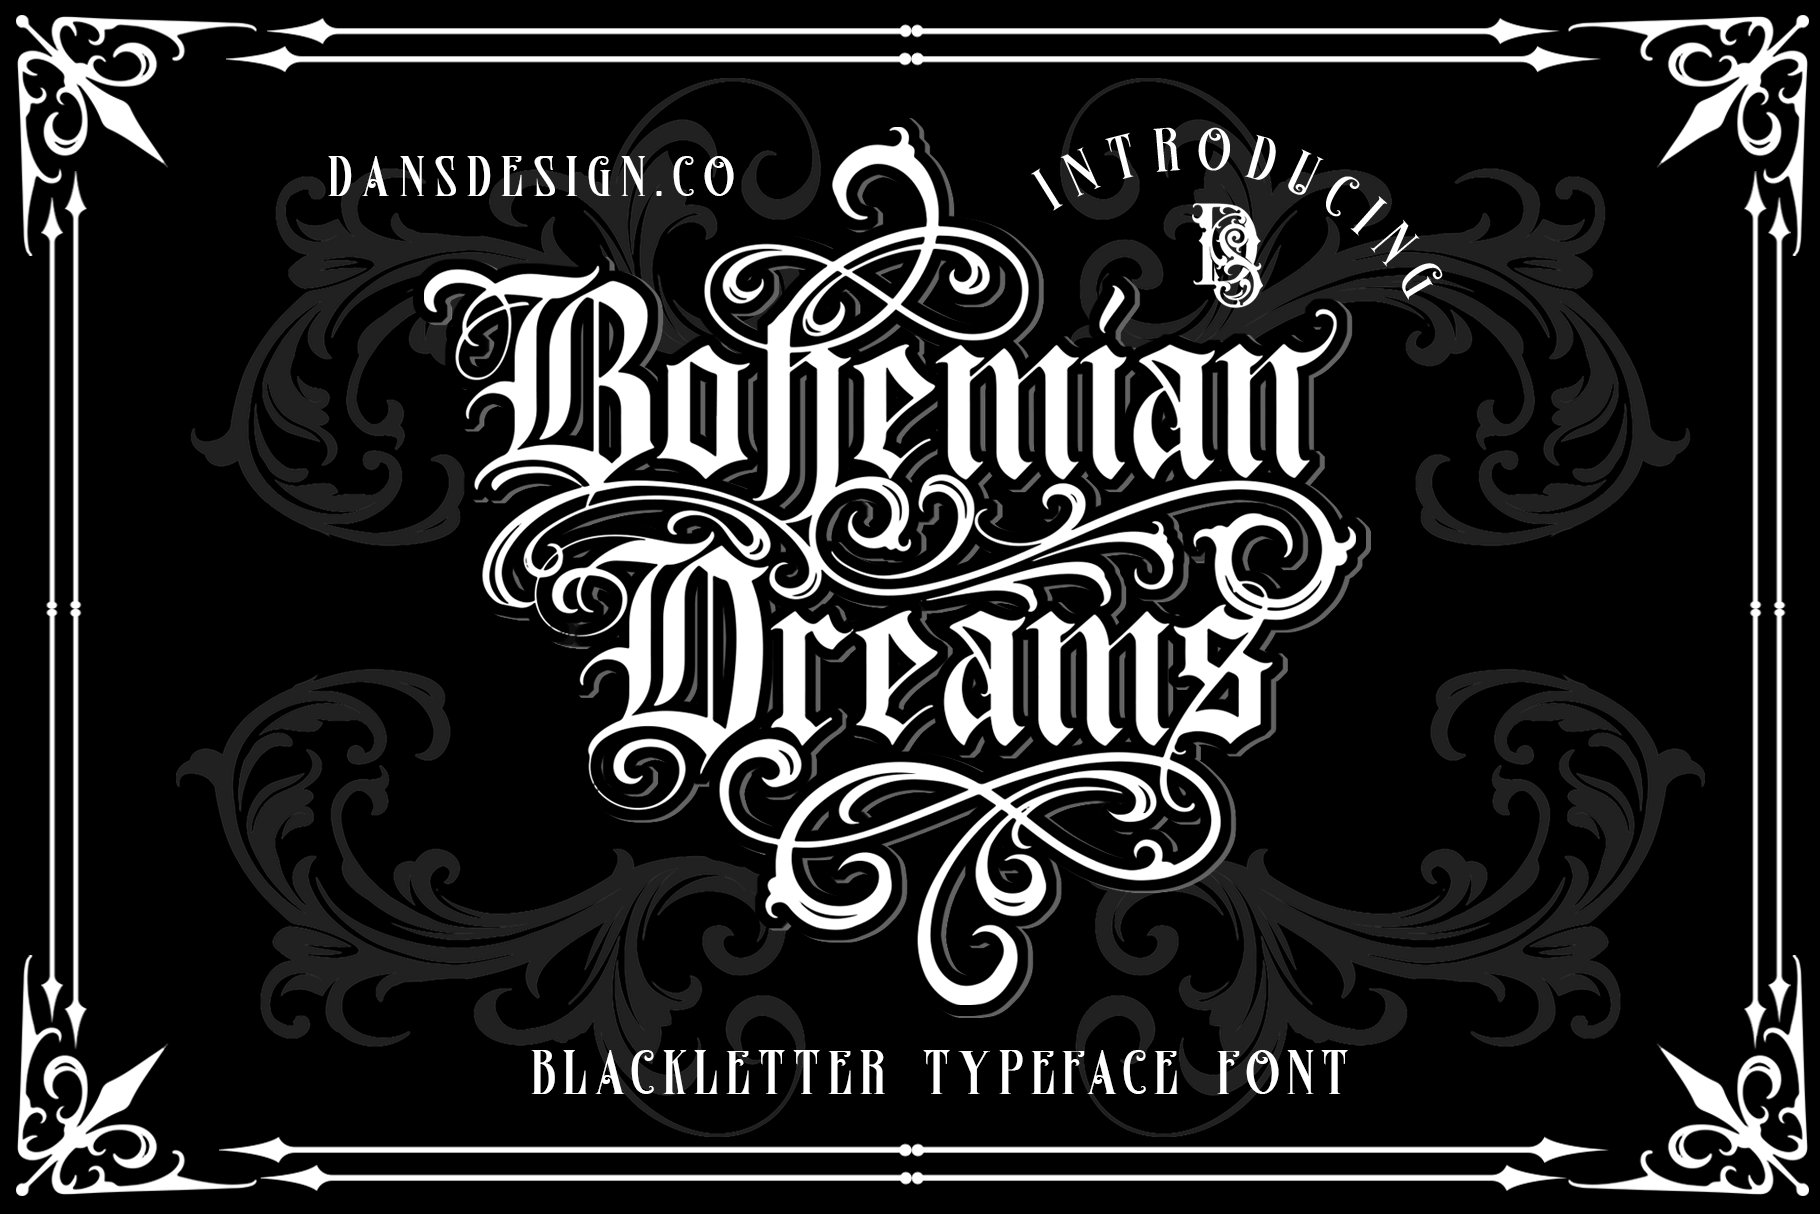 Bohemian Dreams cover image.